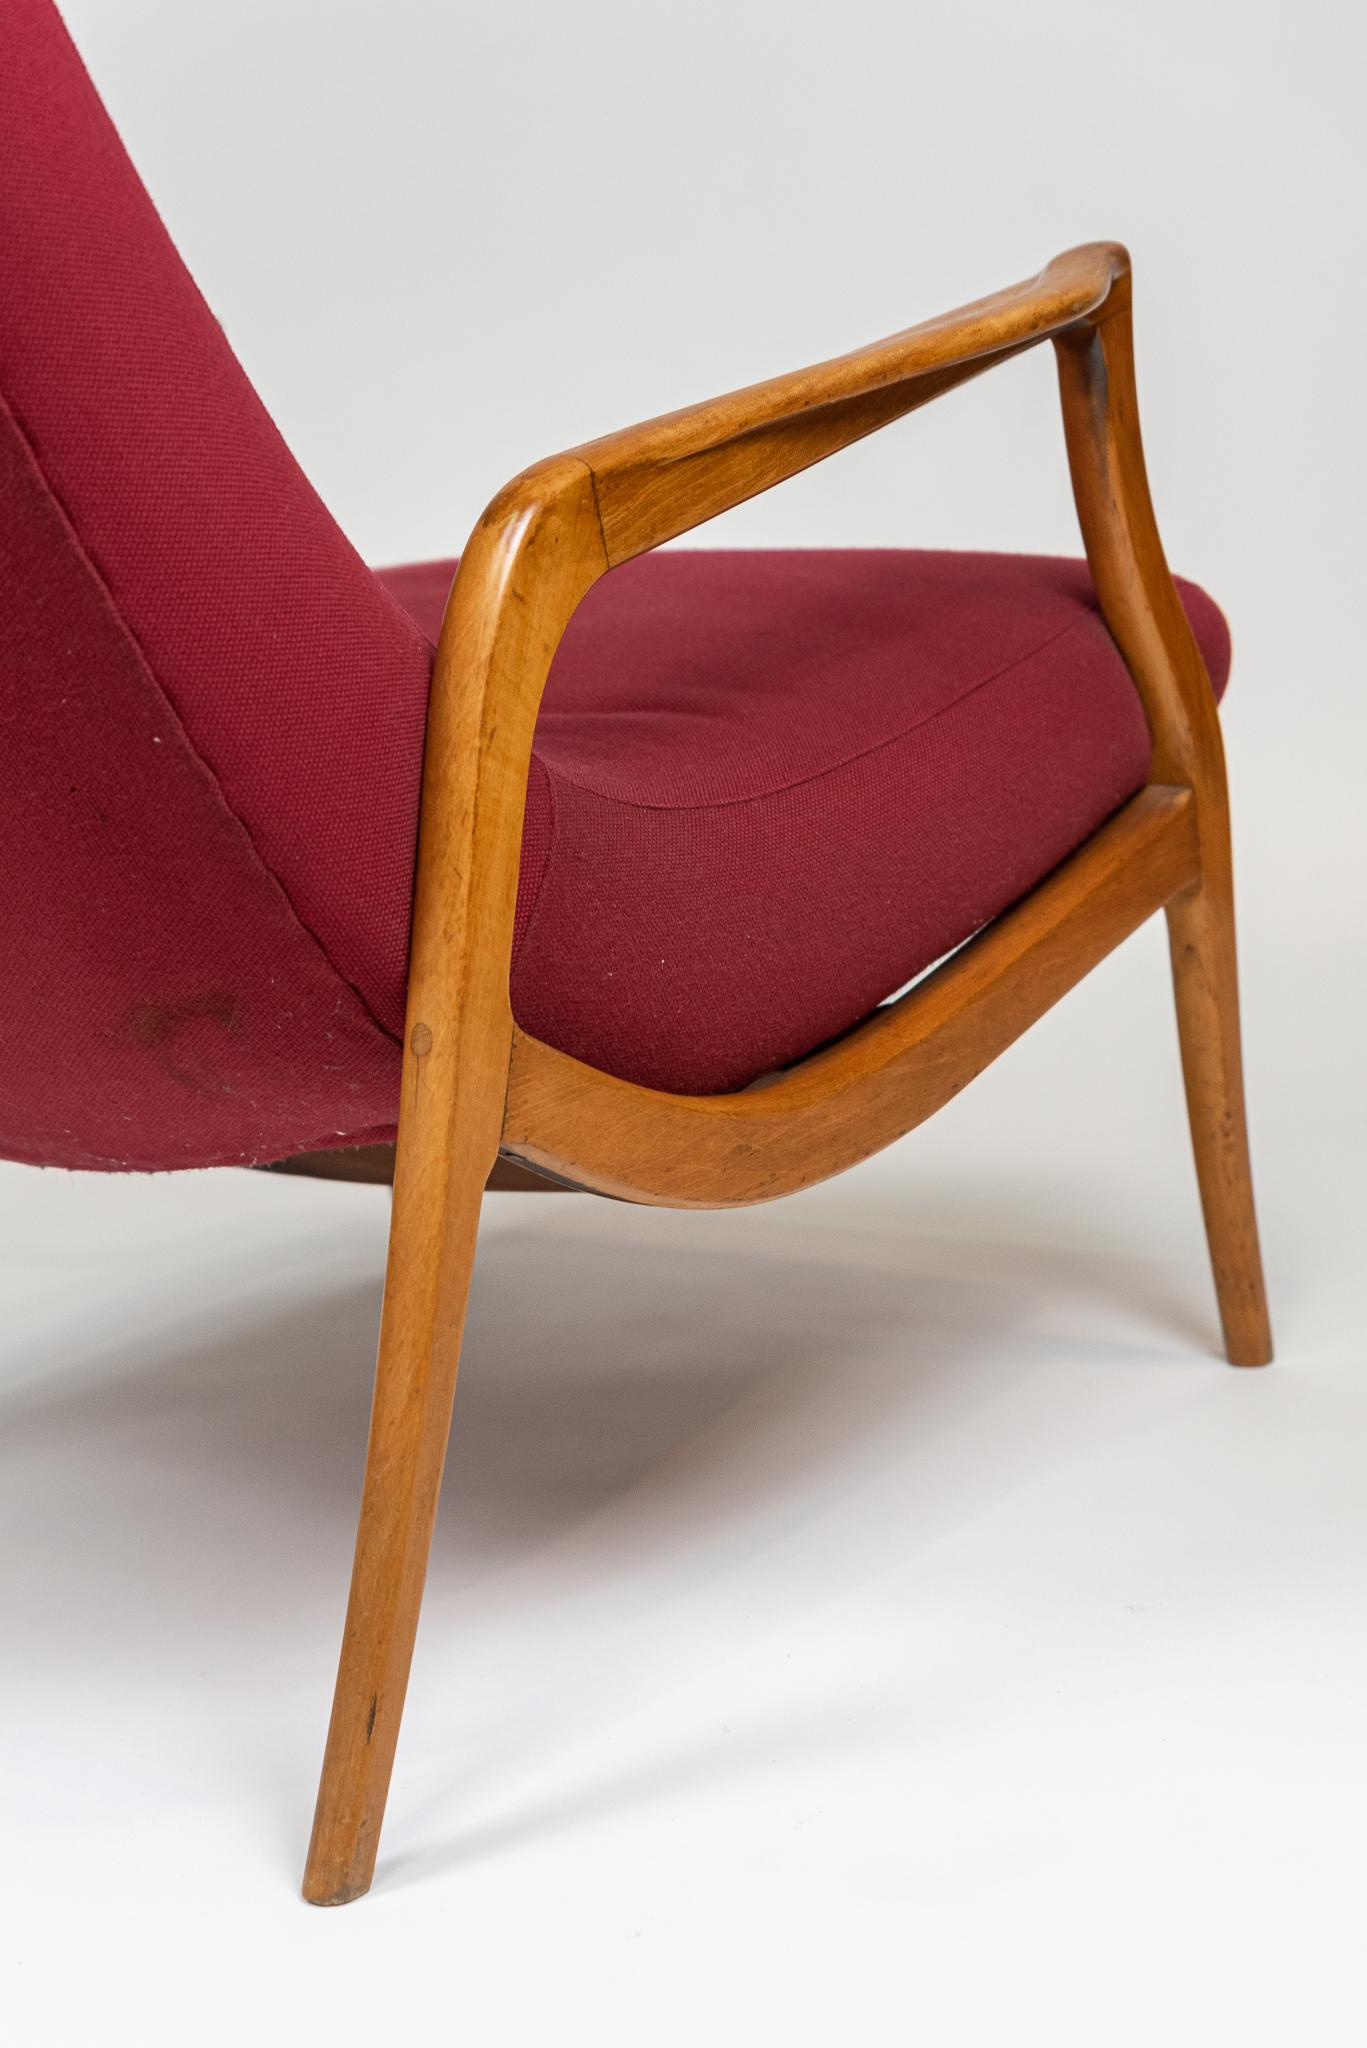 Brazilian Armchair. Moveis Gelli Manufacture, in Caviuna's Wood. 1960's For Sale 1